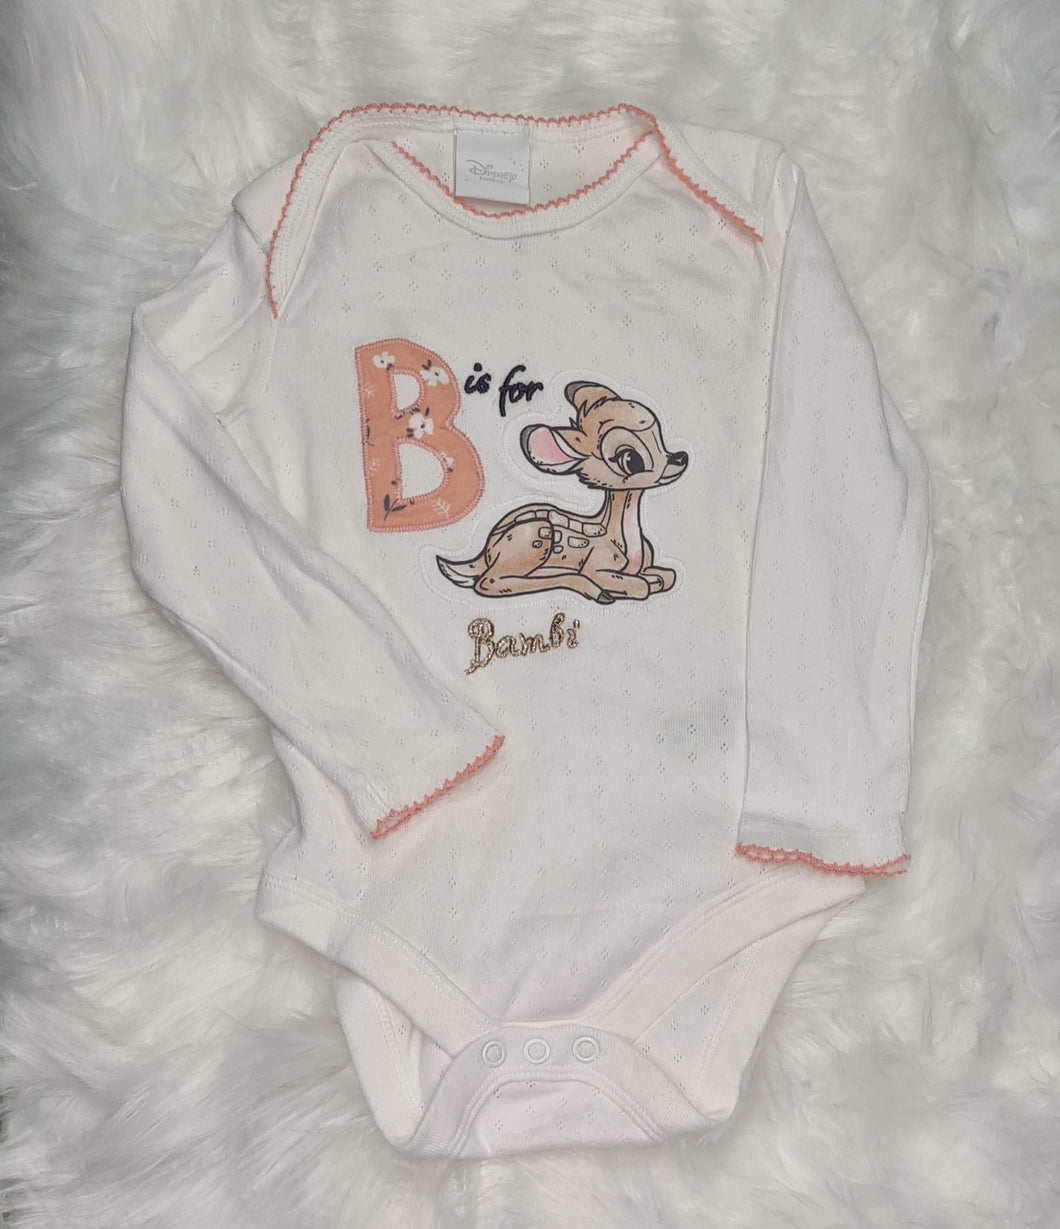 Girls 9-12 months - Bambi Disney vest